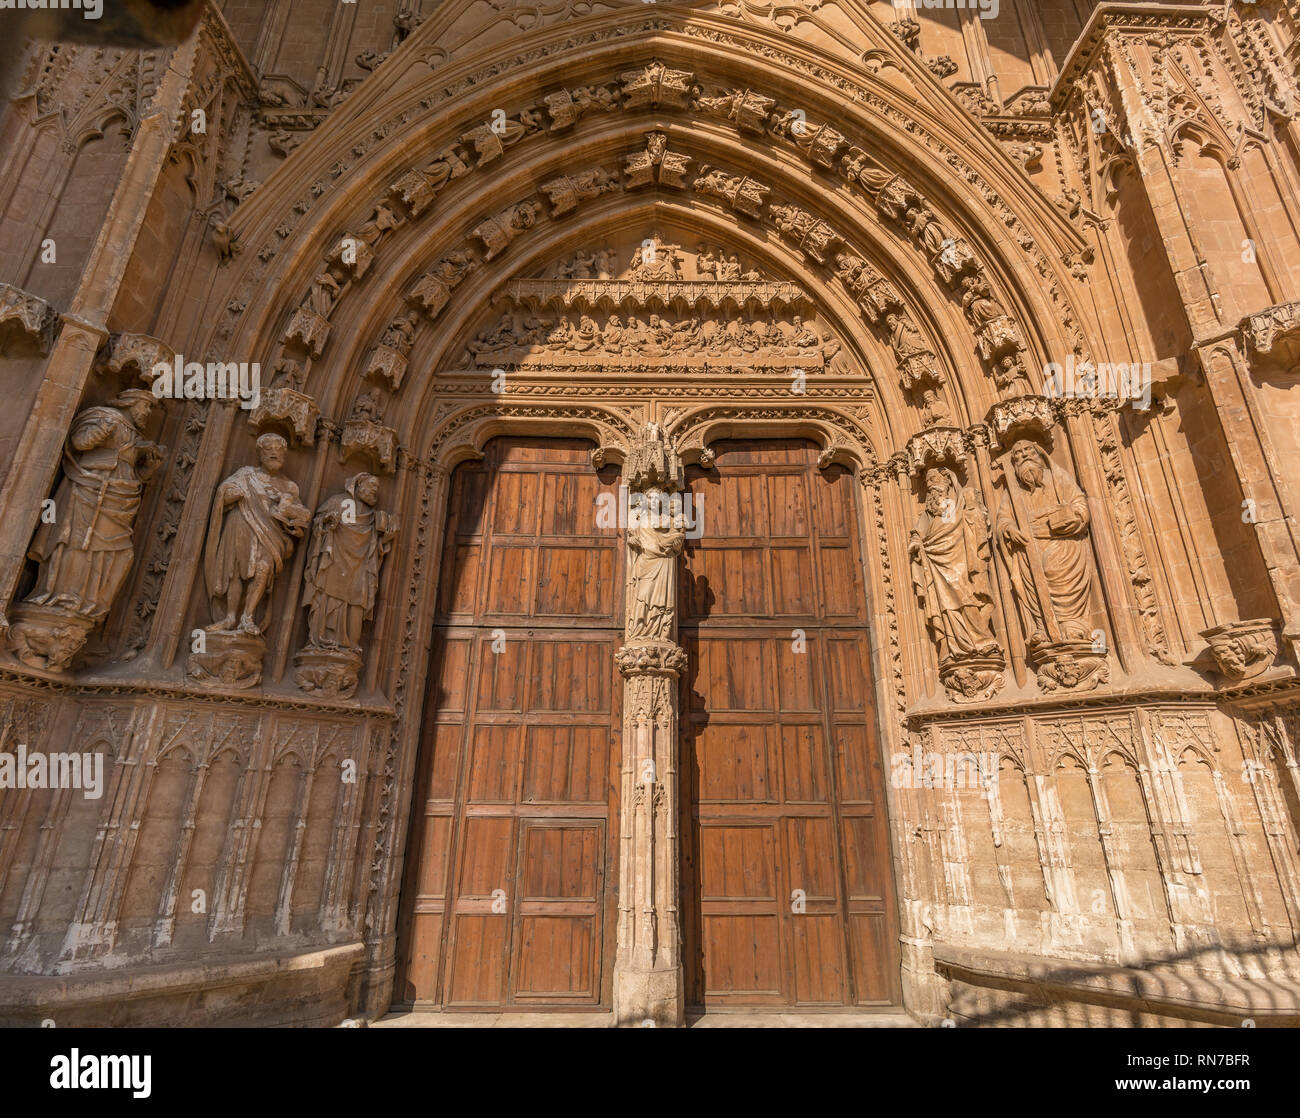 Puerta puerta de entrada de la catedral de Mallorca (La Seu), de la  catedral gótica de Palma de Mallorca. Mallorca, Islas Baleares, España  Fotografía de stock - Alamy